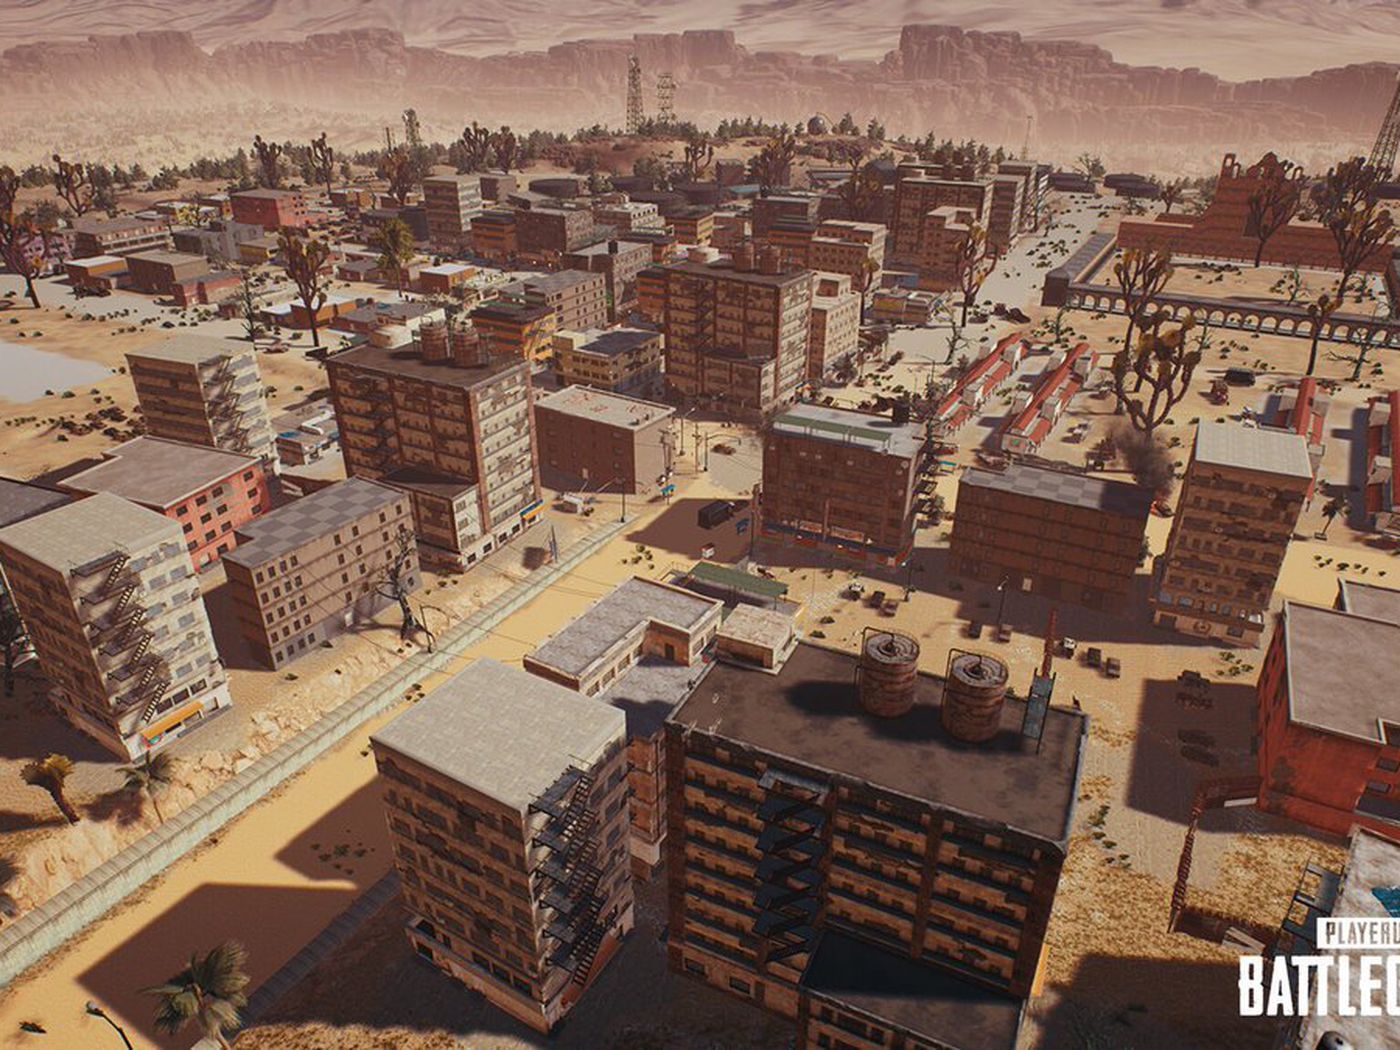 PUBG's next map will feature a dense, urban jungle